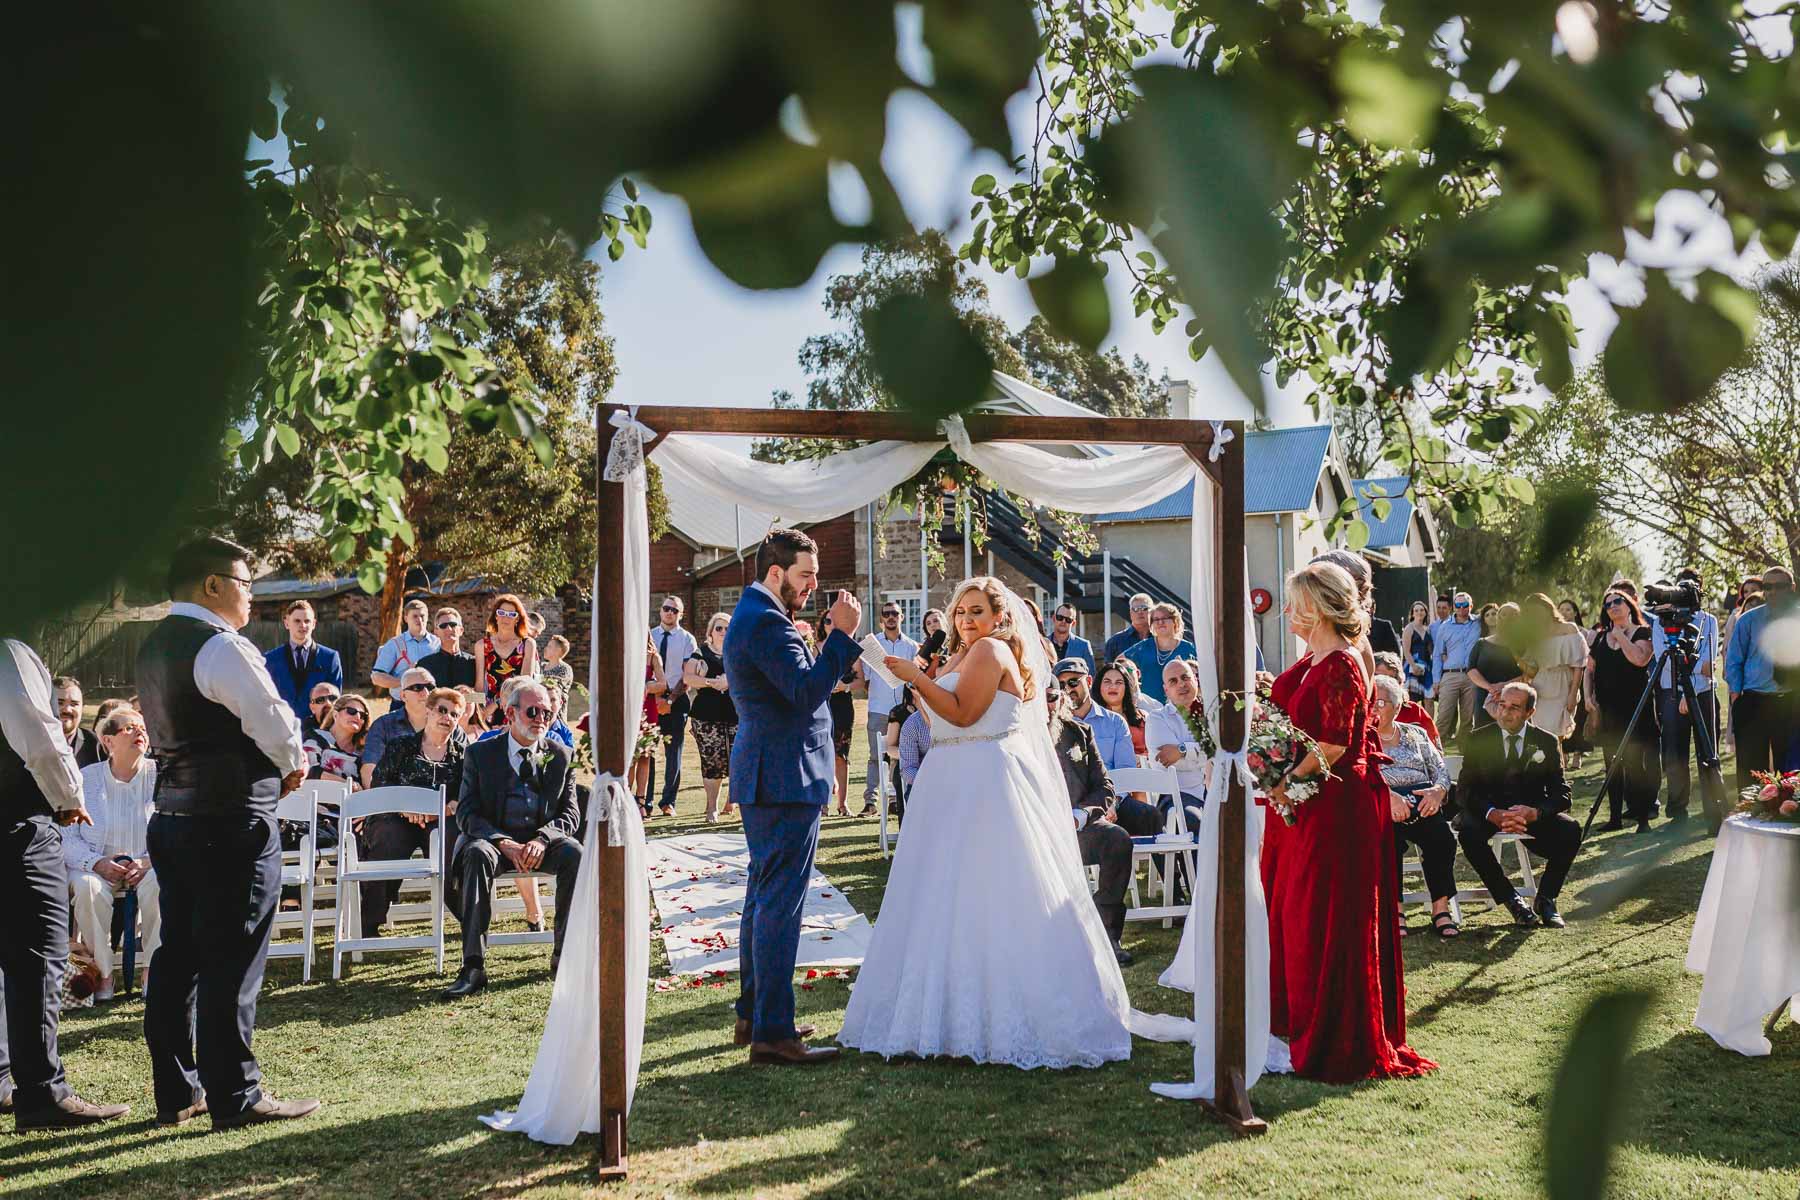 A bride gets emotional as she says her wedding vows, Gledswood Estate ceremony